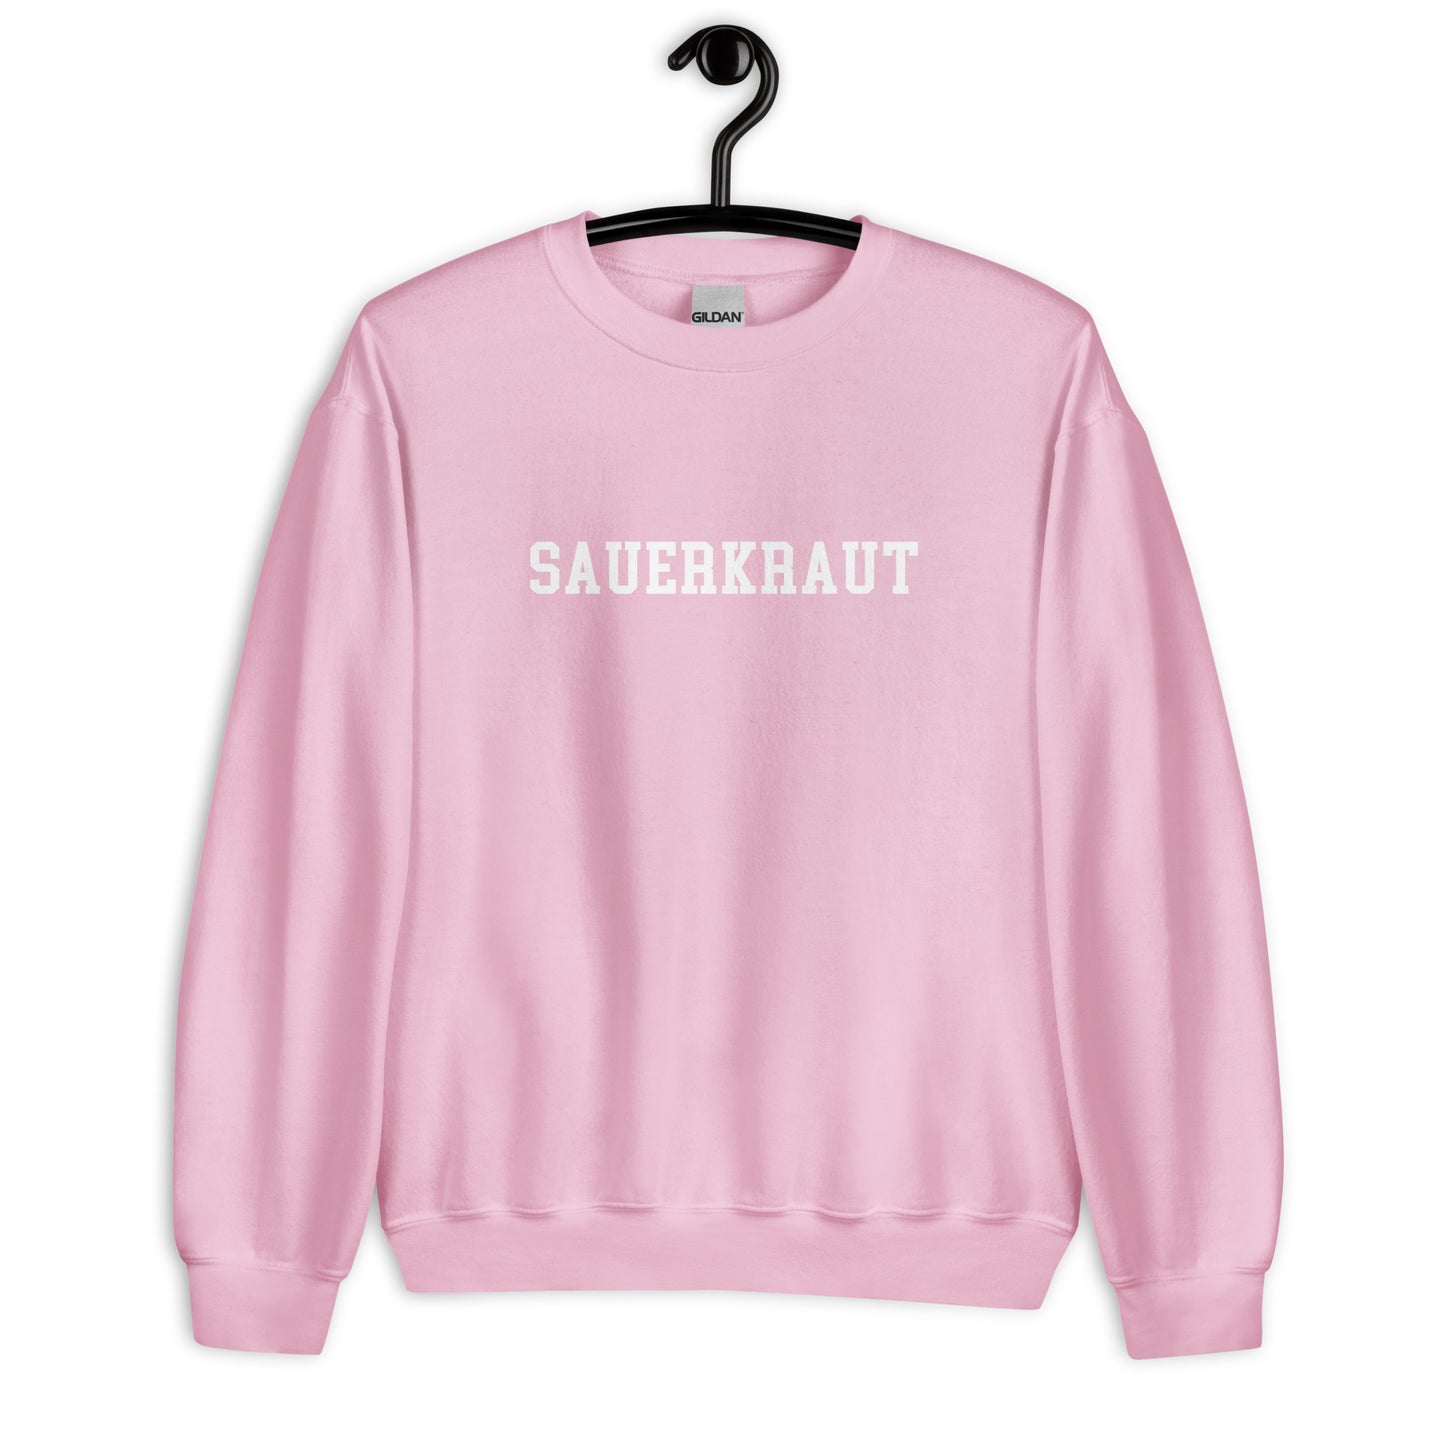 Sauerkraut Sweatshirt - Straight Font